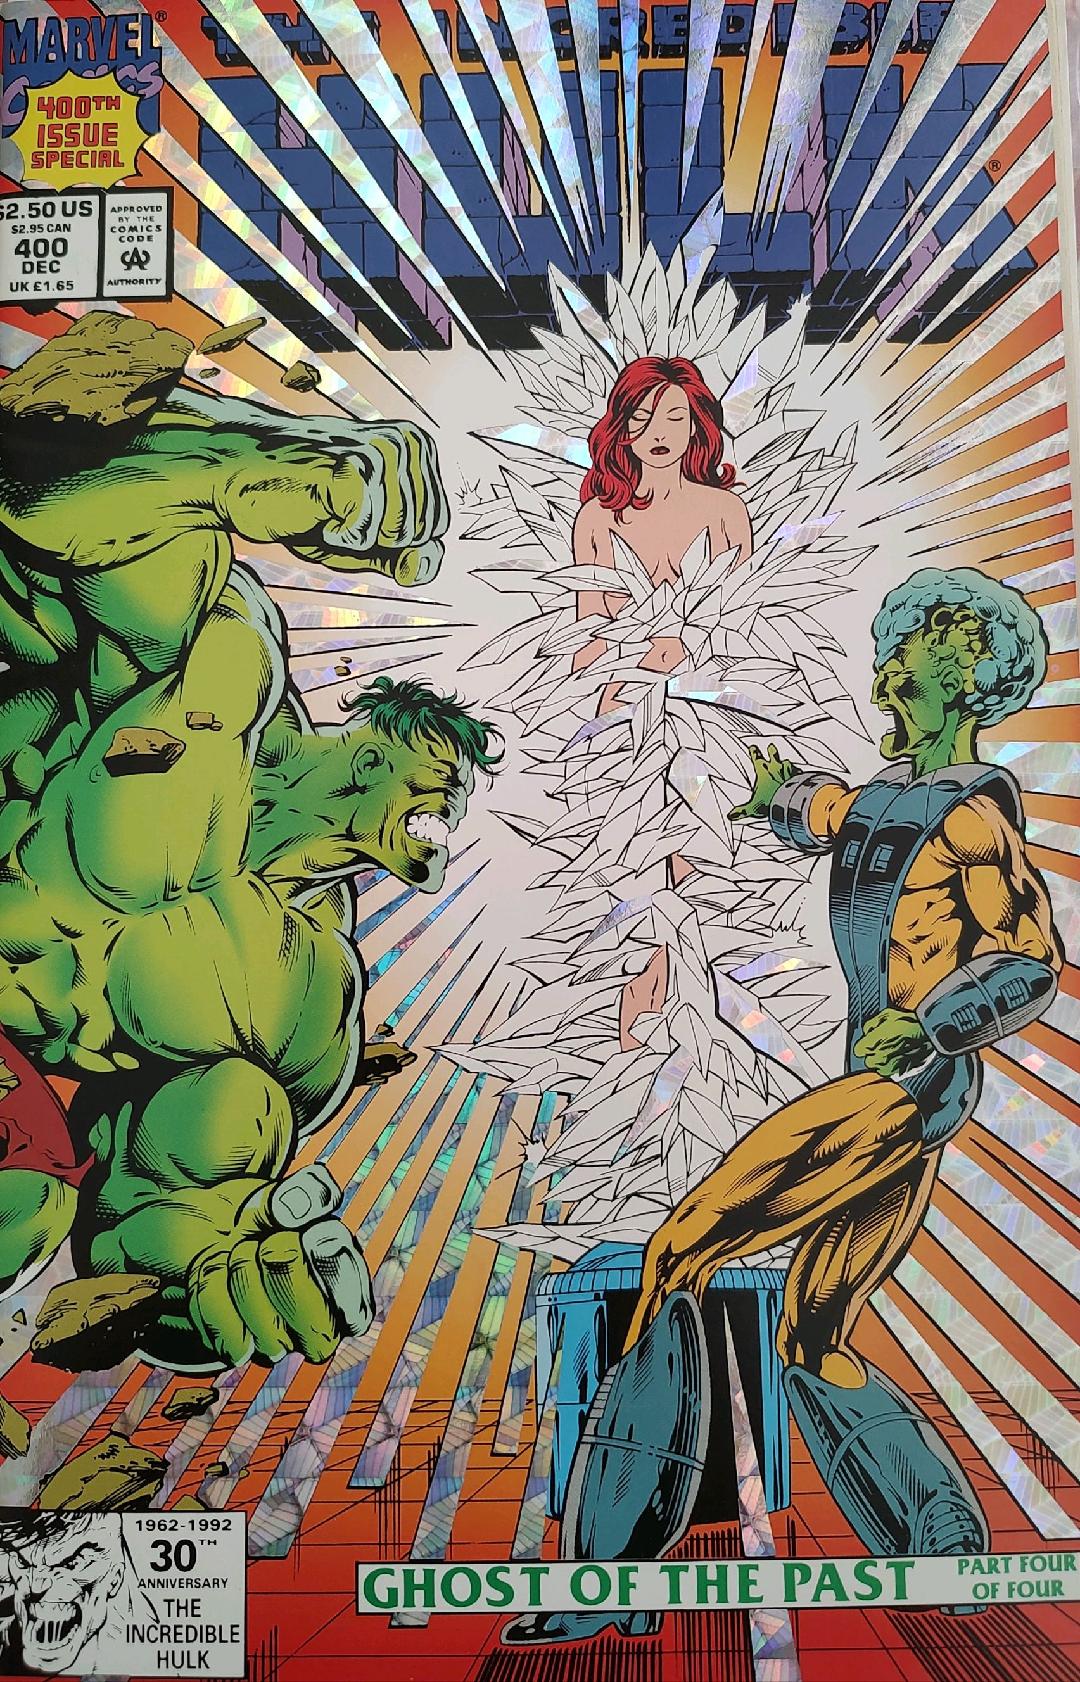 The Incredible Hulk #400 Comic Book Cover